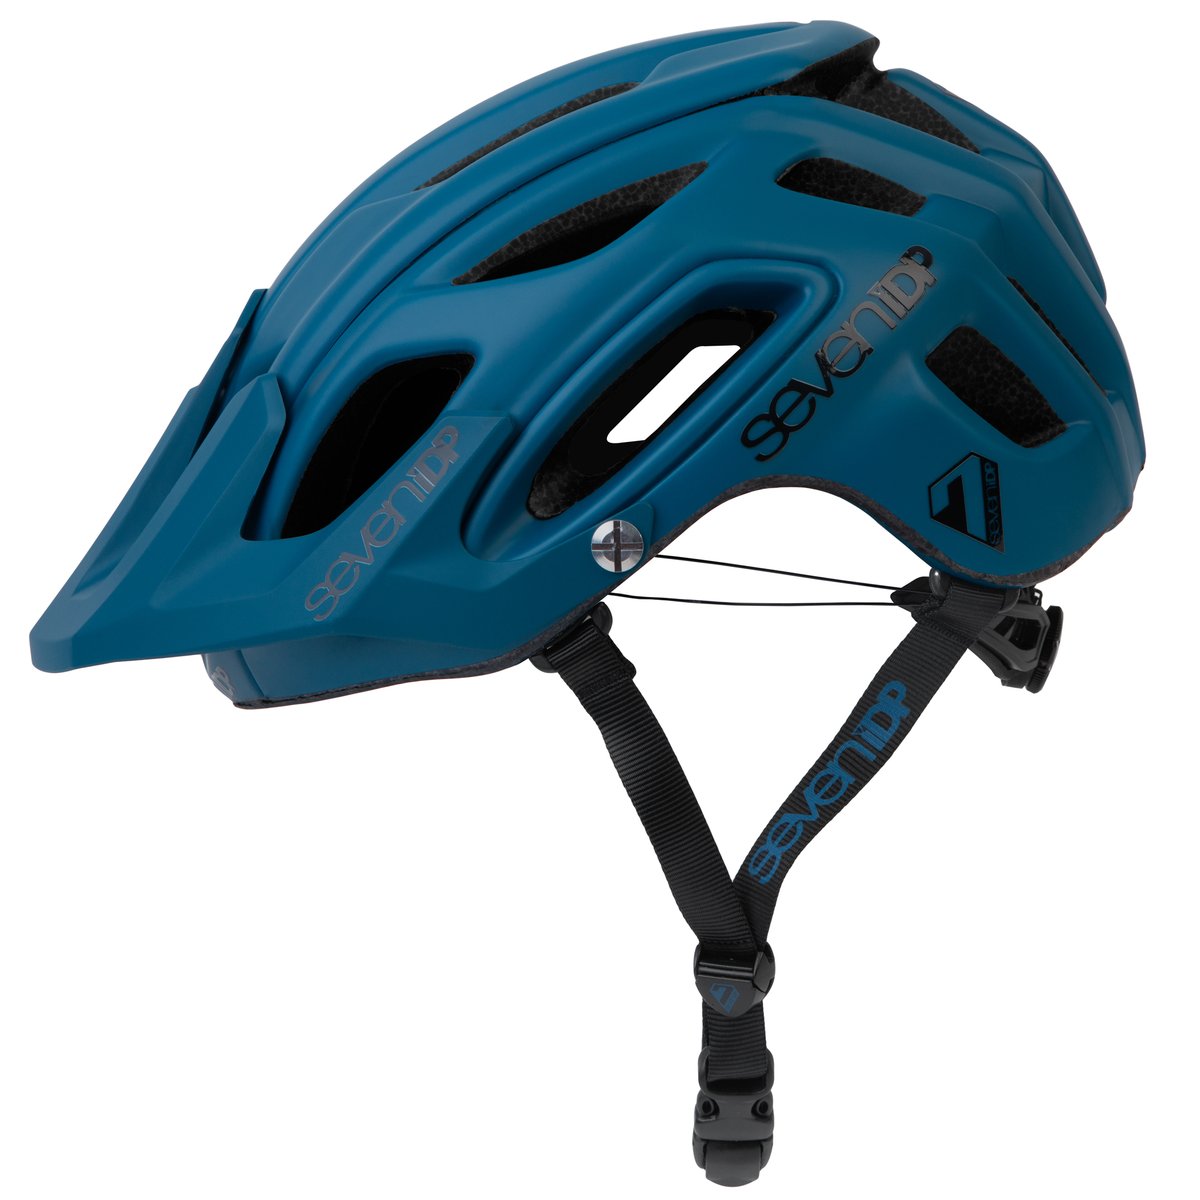 7 iDP M2 BOA MTB Helmet - Diesel Blue